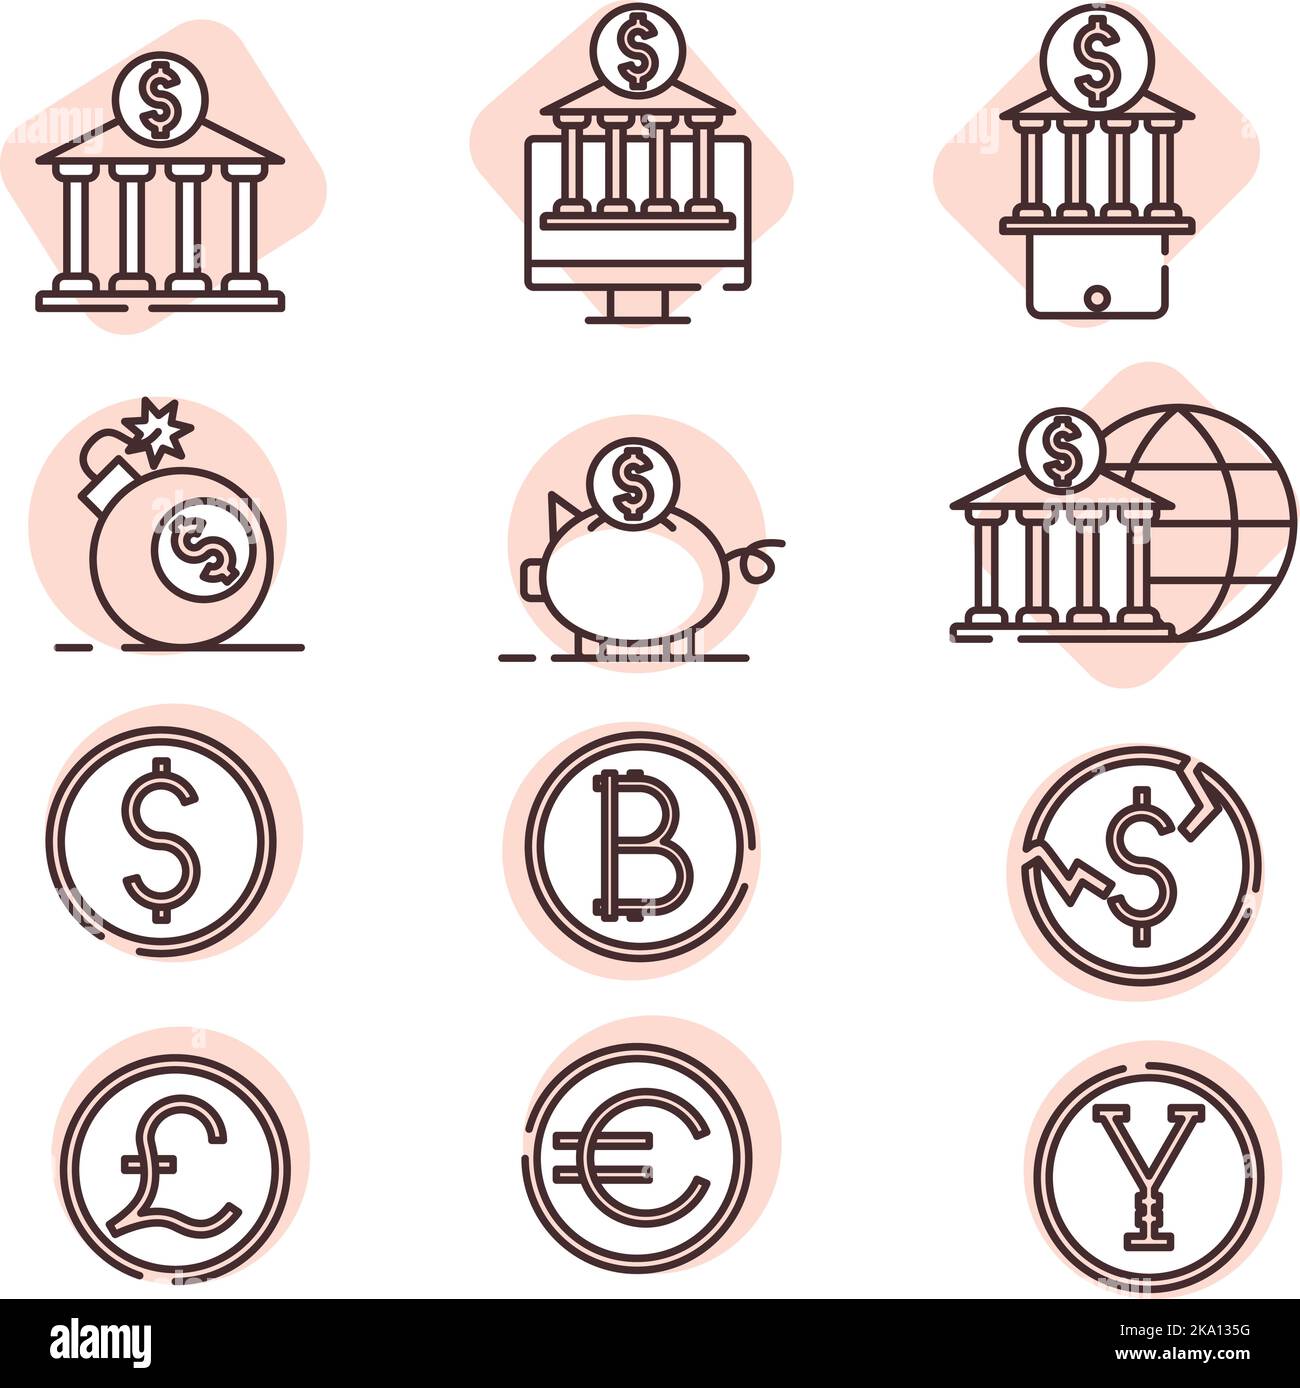 International money, illustration or icon, vector on white background. Stock Vector